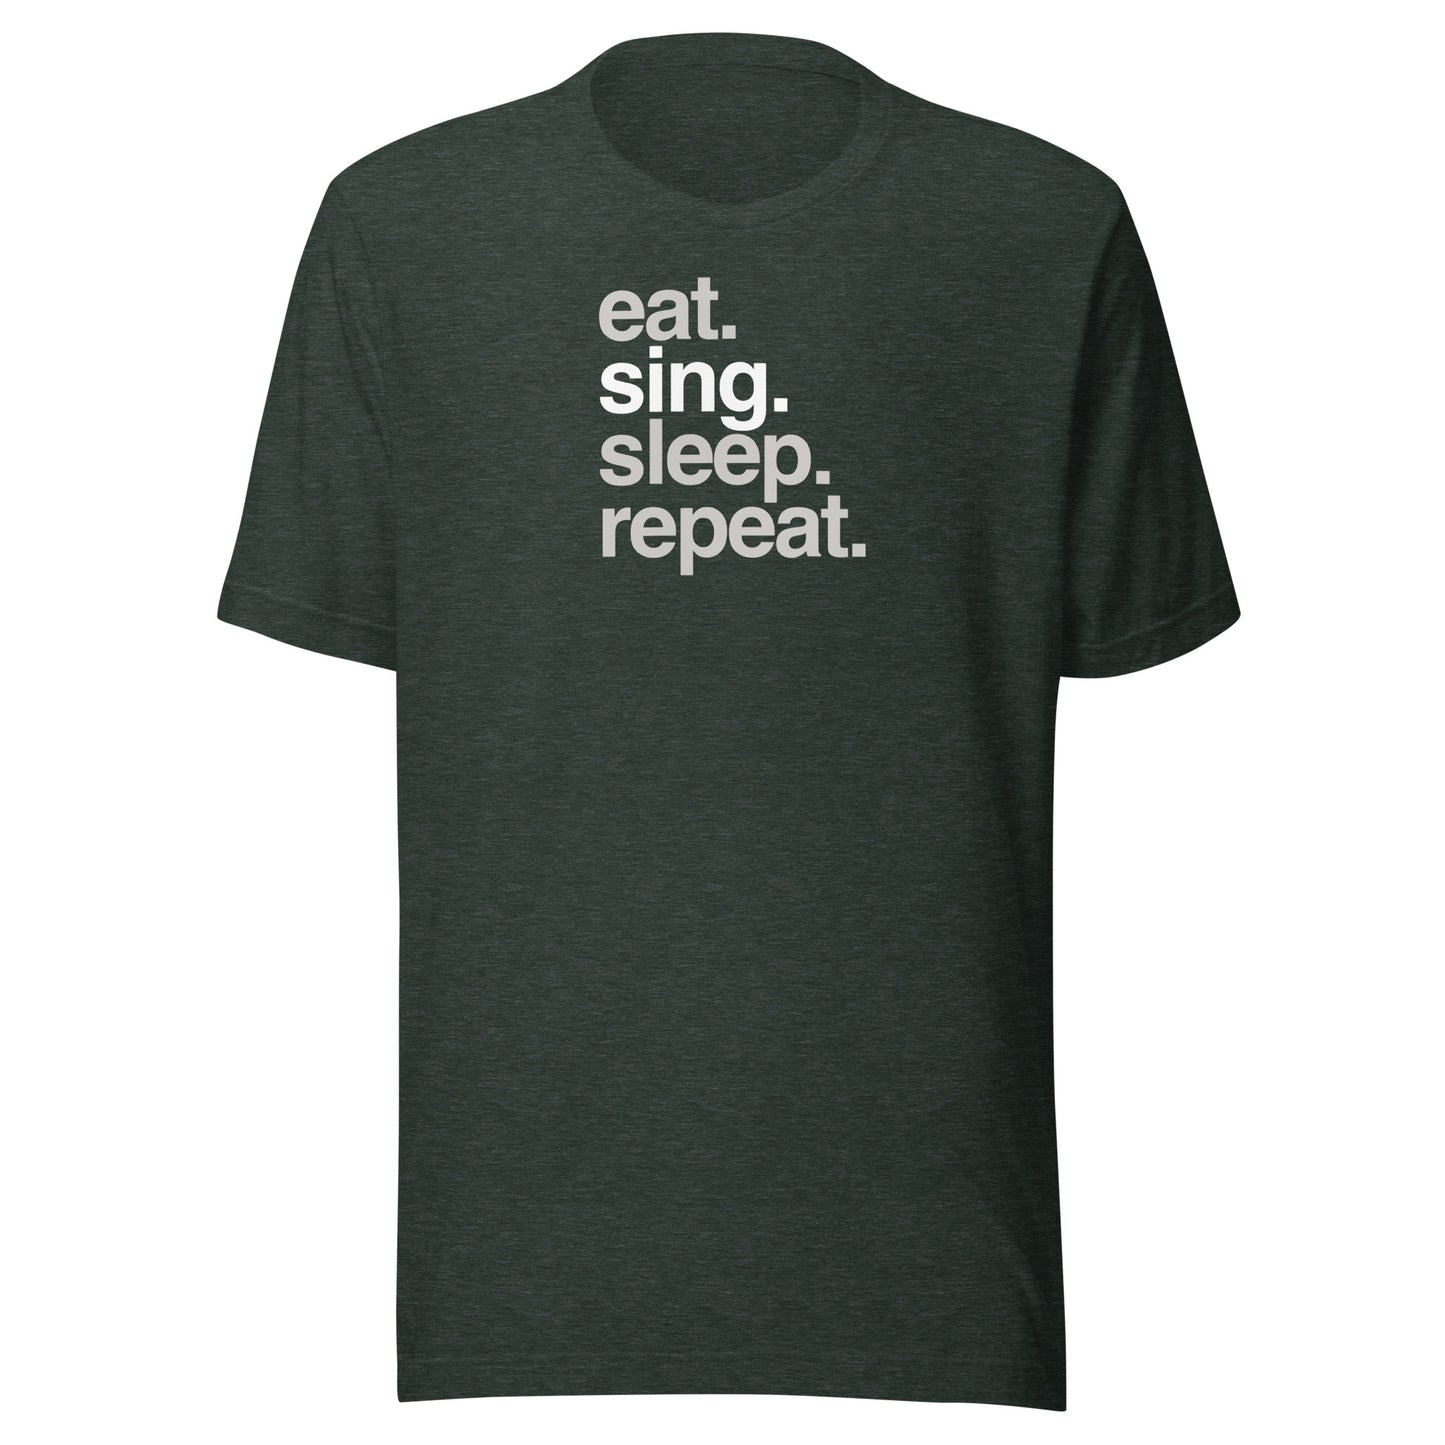 eat sing sleep repeat - Unisex T-shirt